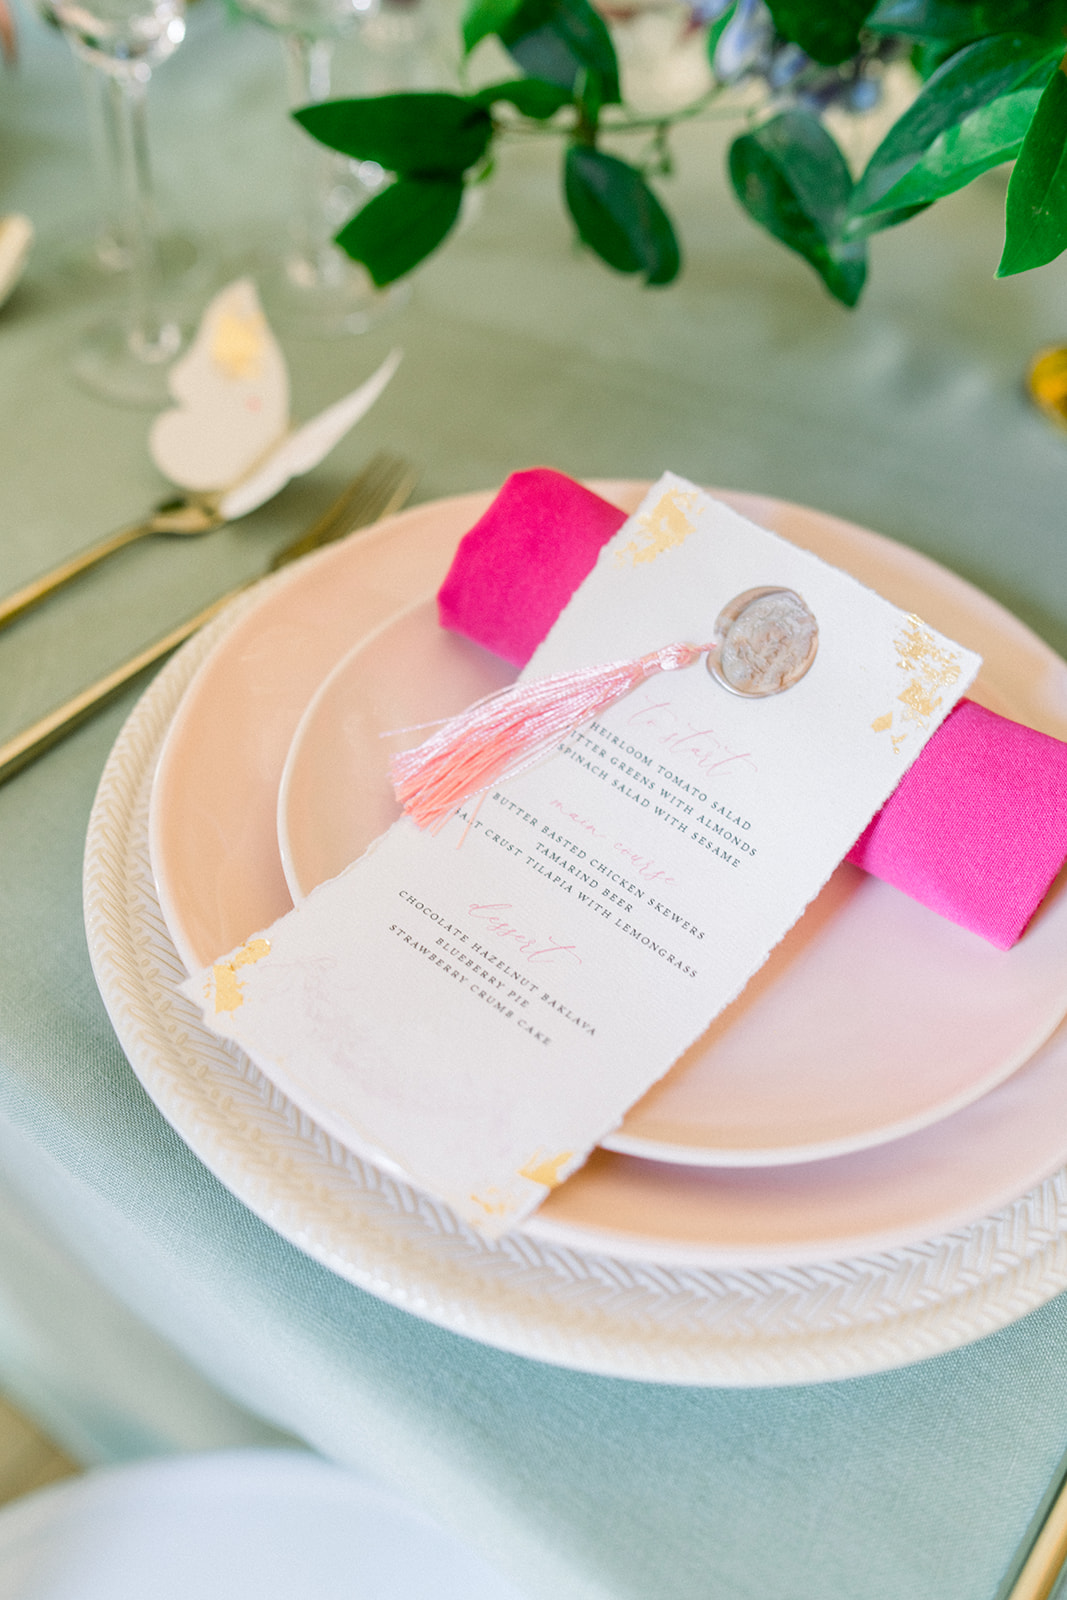  luxury destination wedding table setting gold cutlery, and an elegant invitation 